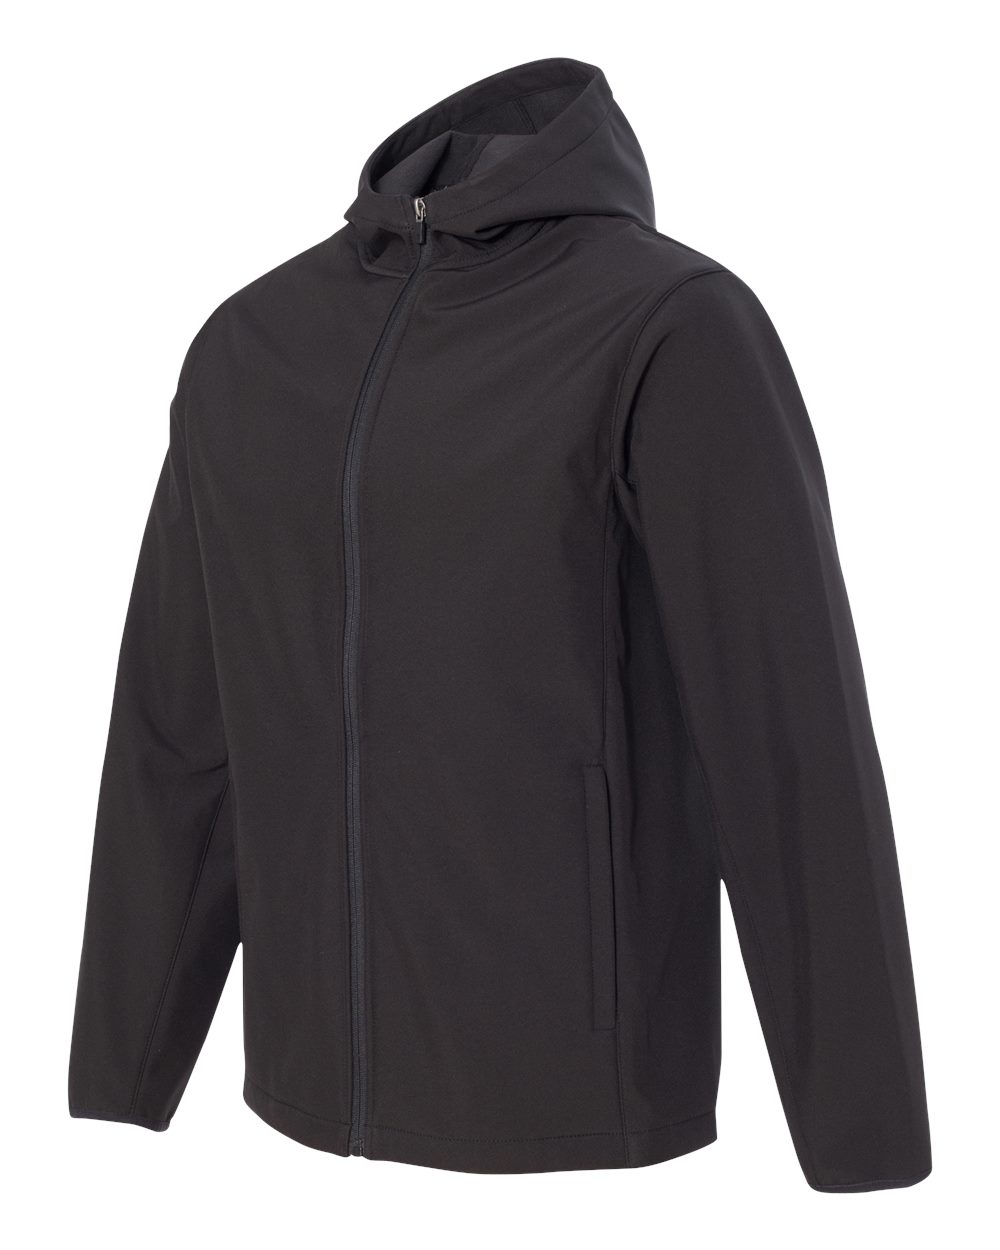 Colorado Clothing 9612 - Hooded Soft Shell Jacket